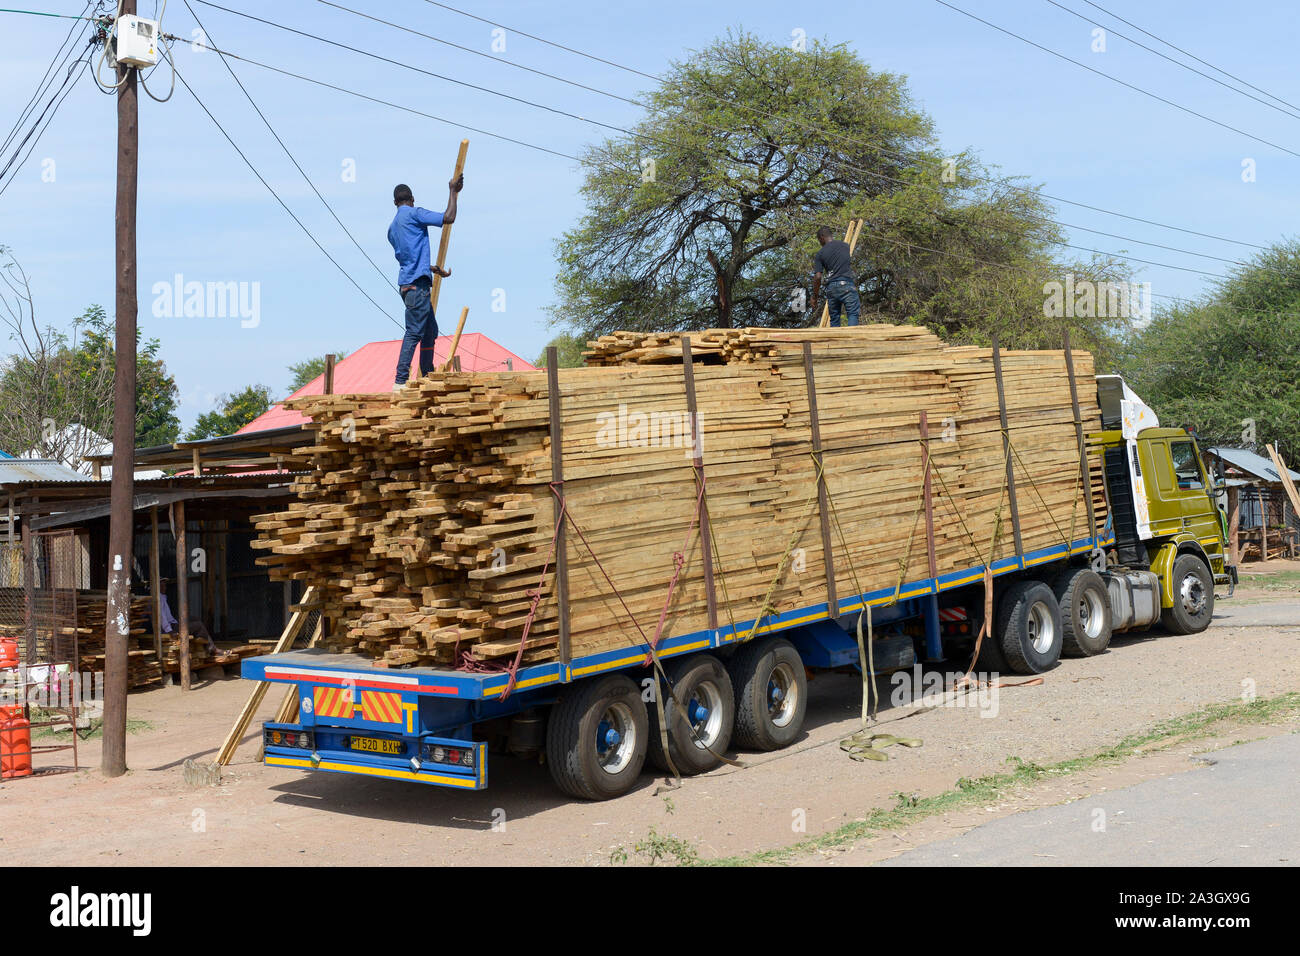 TANZANIA, distrito de Tarime, de Tarime, camión con madera / Holztransport, mit LKW Holz Foto de stock